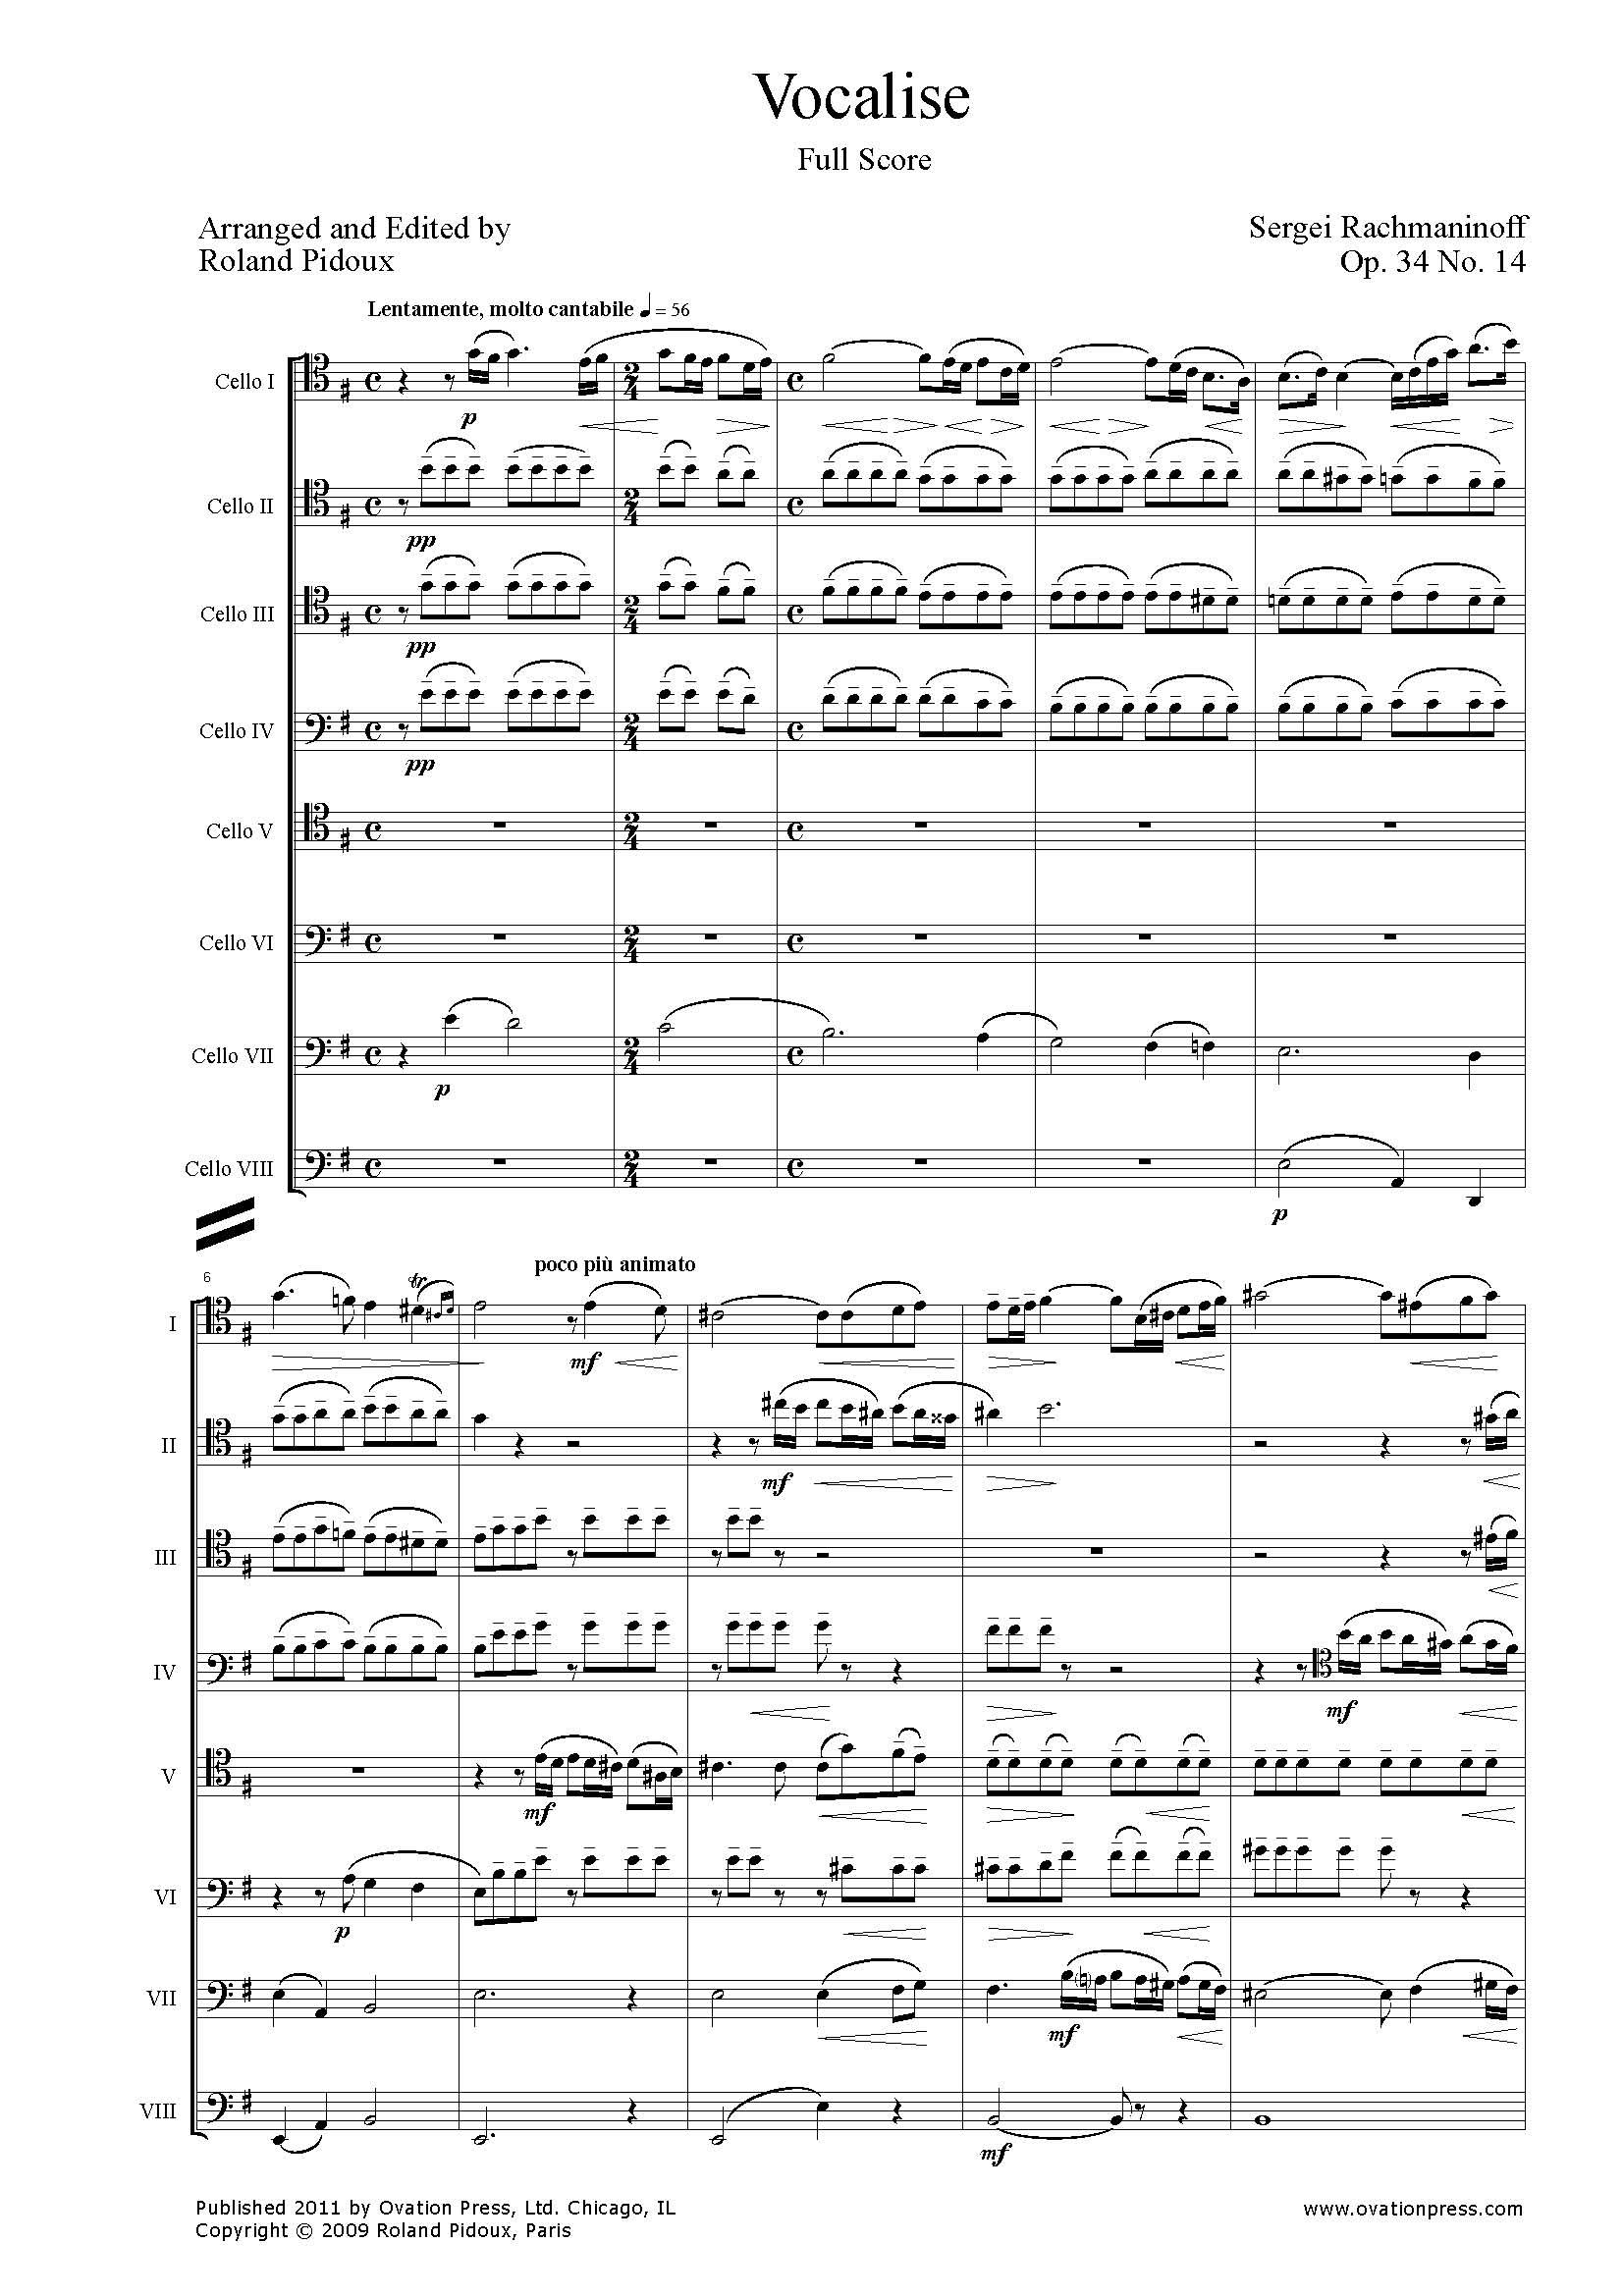 Rachmaninoff Vocalise Arranged for Cello Octet